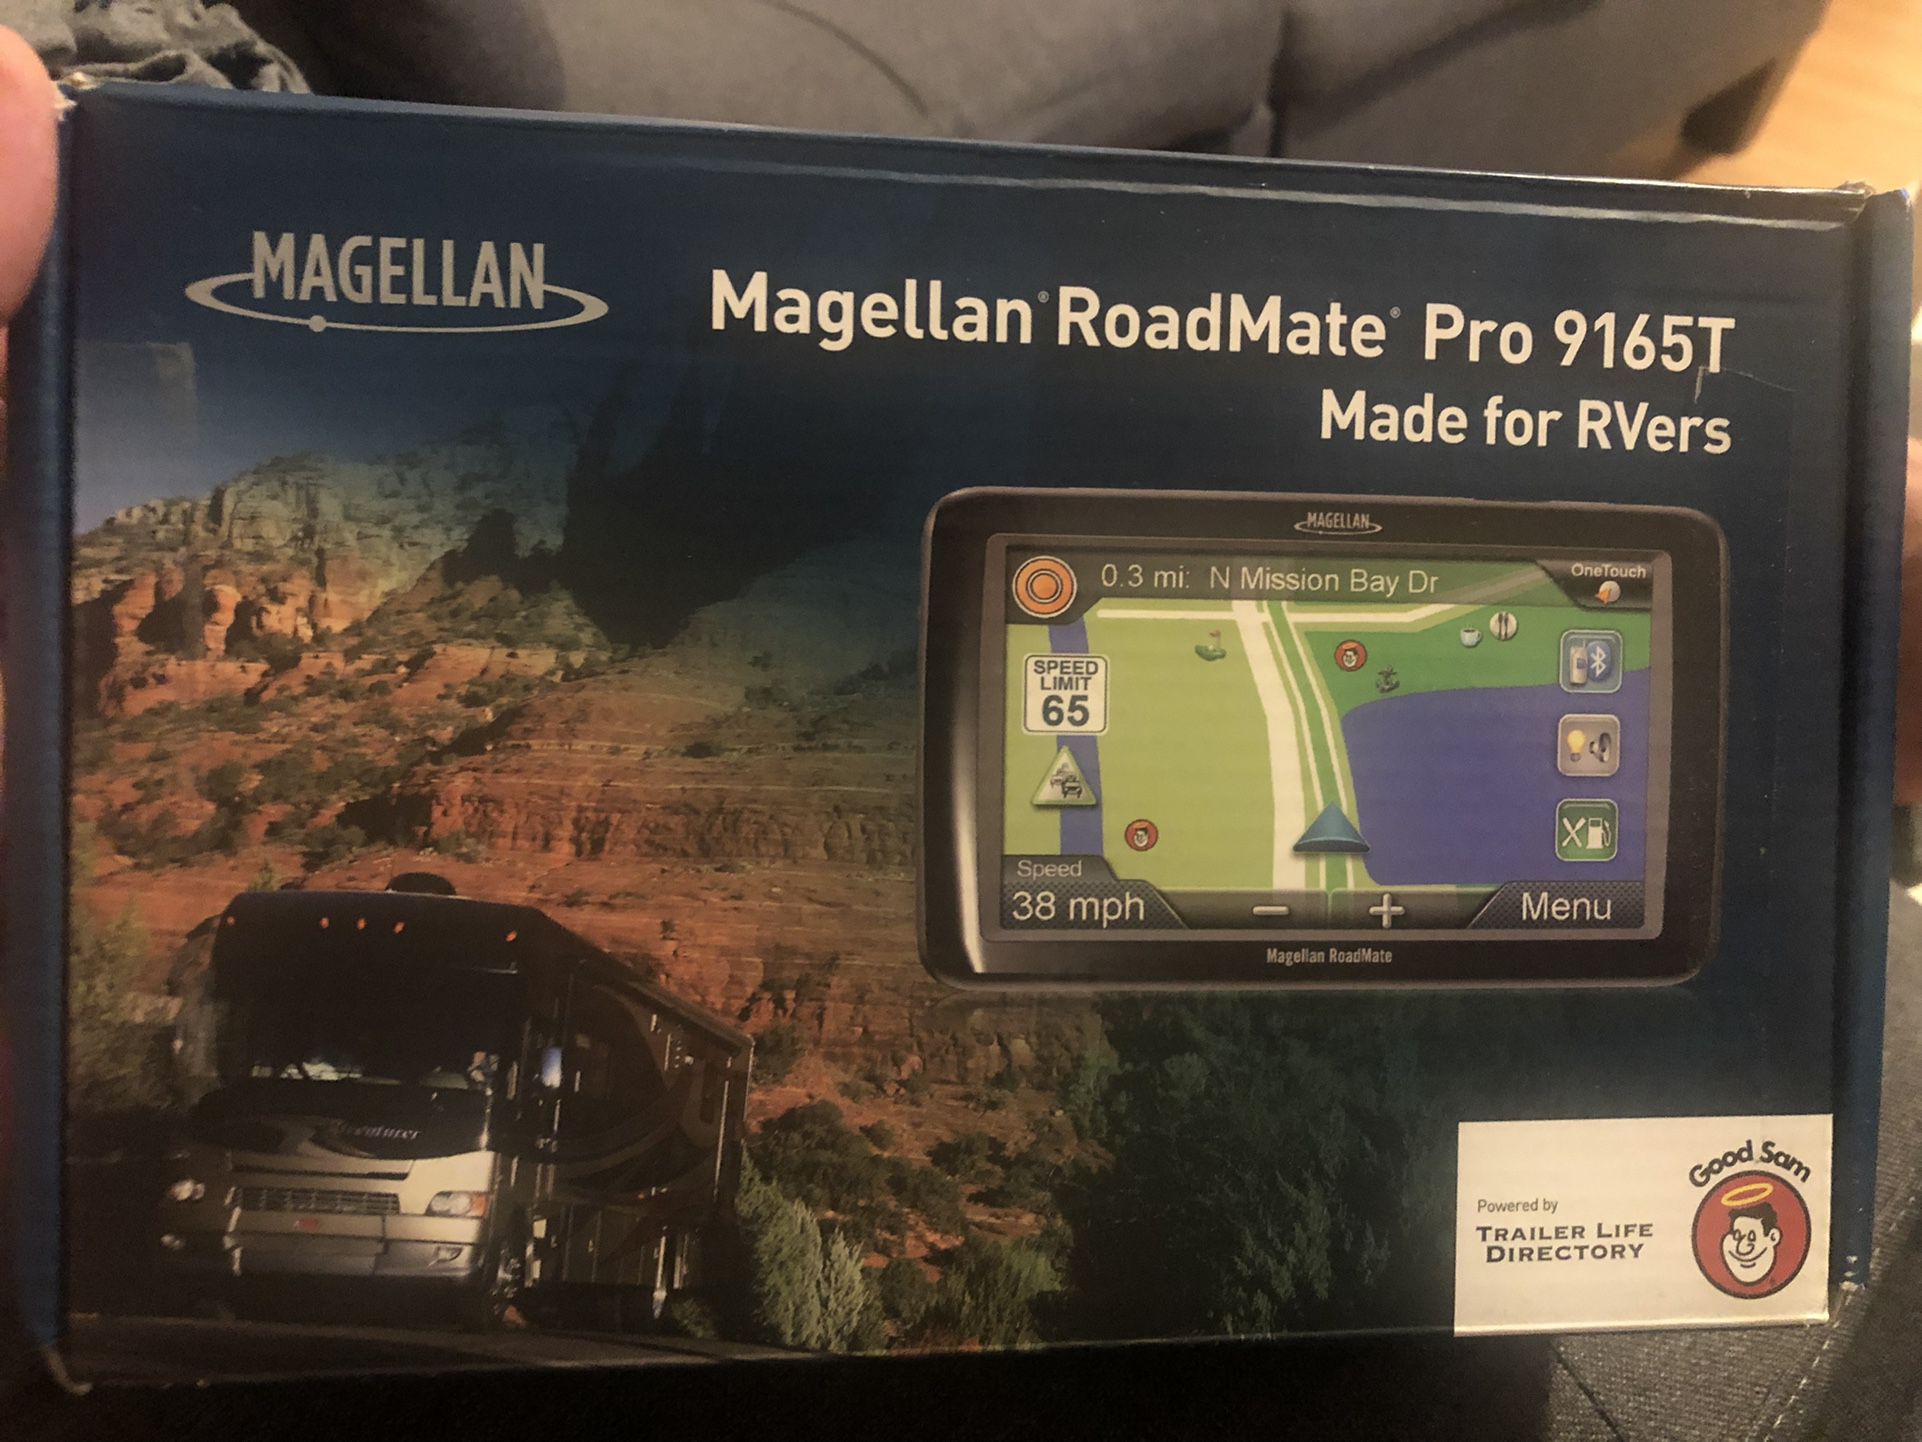 Magellan roadmate pro 9165T